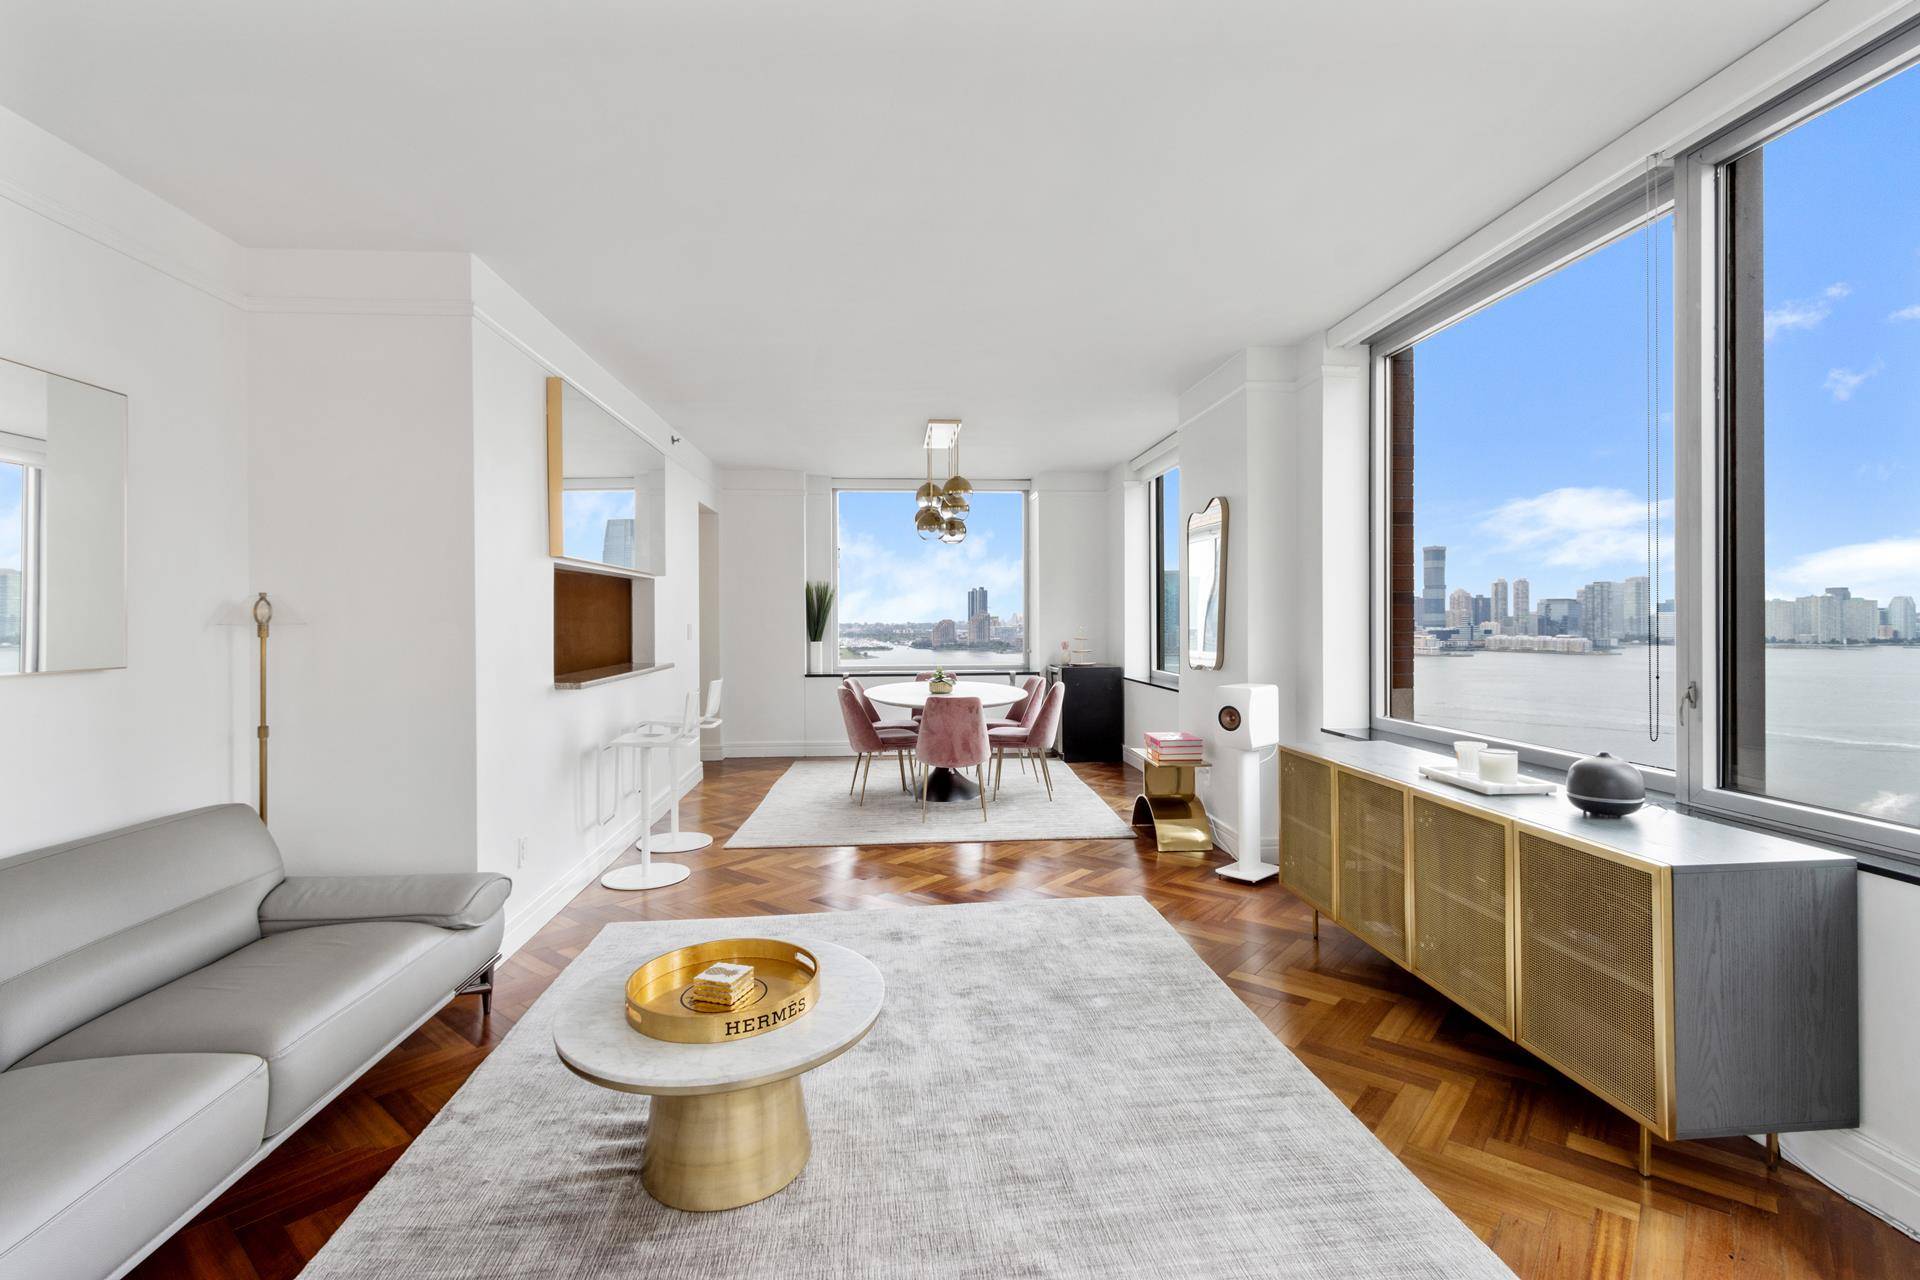 This breathtaking corner 2 bedroom, 2 1 2 bathroom apartment is located in The Ritz Carlton Residences, Battery Park City's most distinctive full service, luxury condominium.